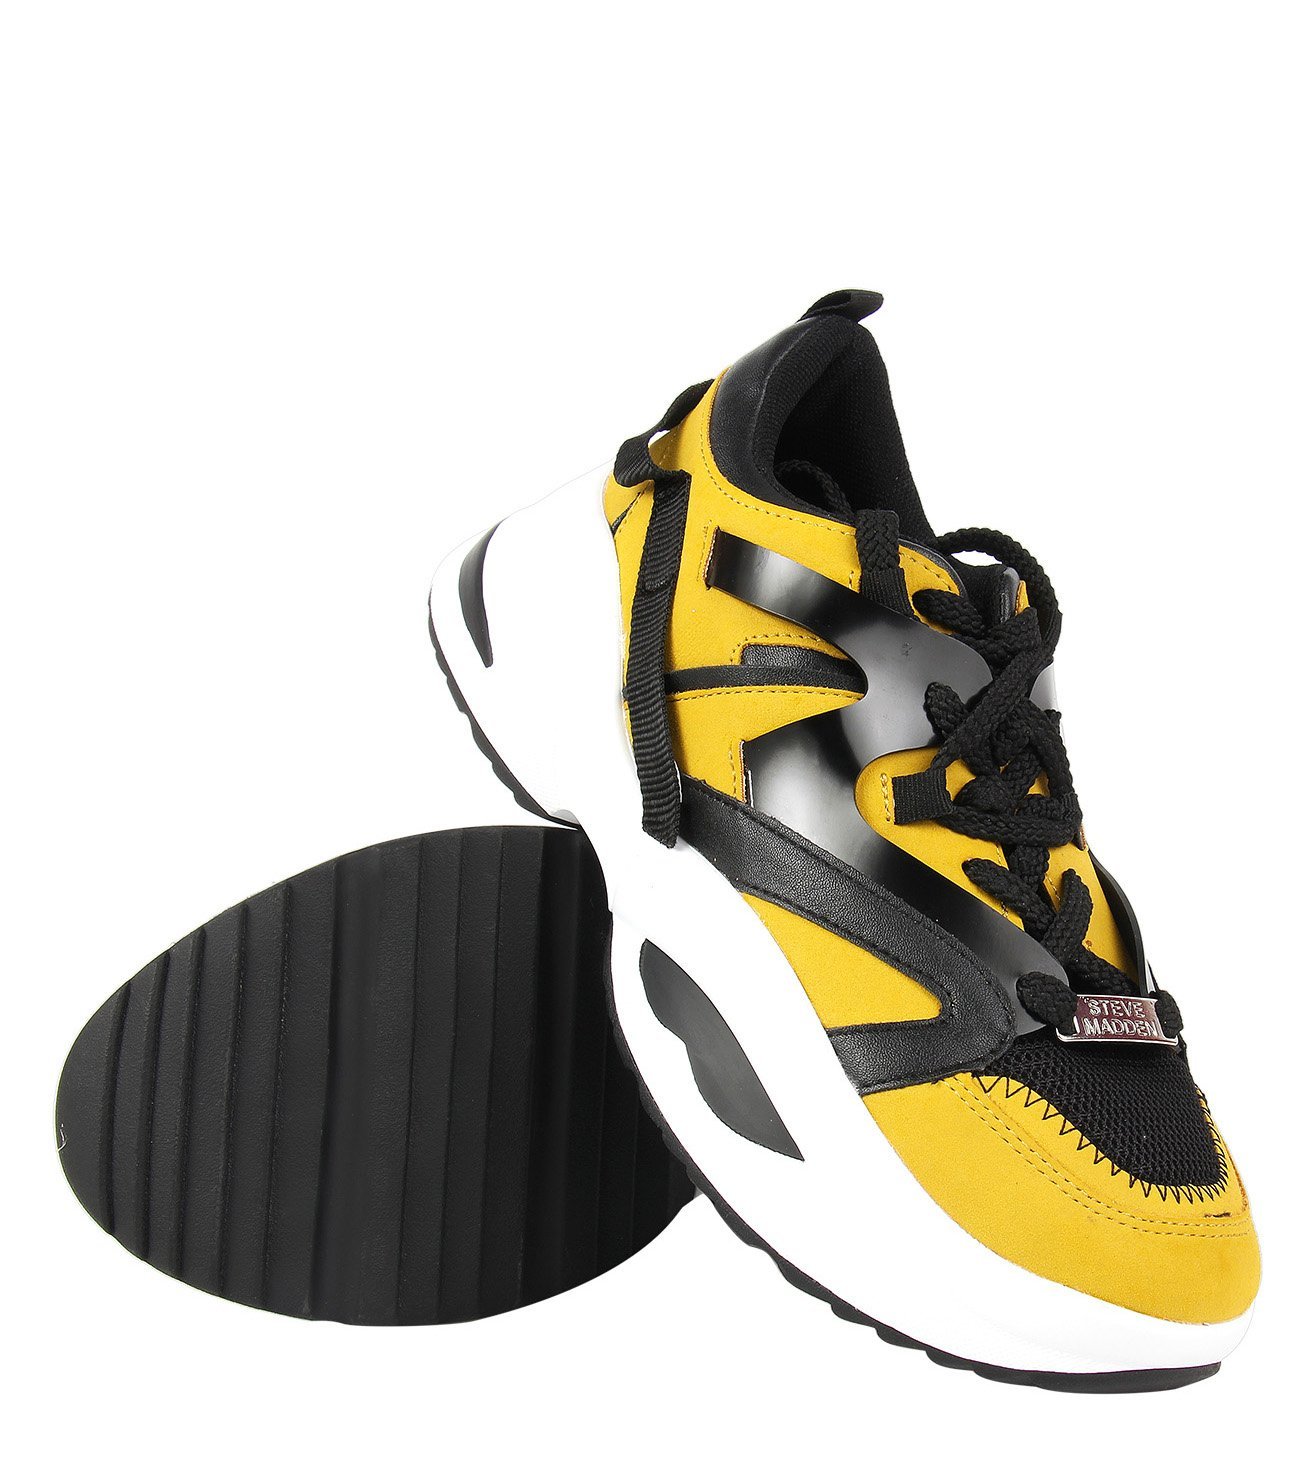 steve madden yellow sneakers